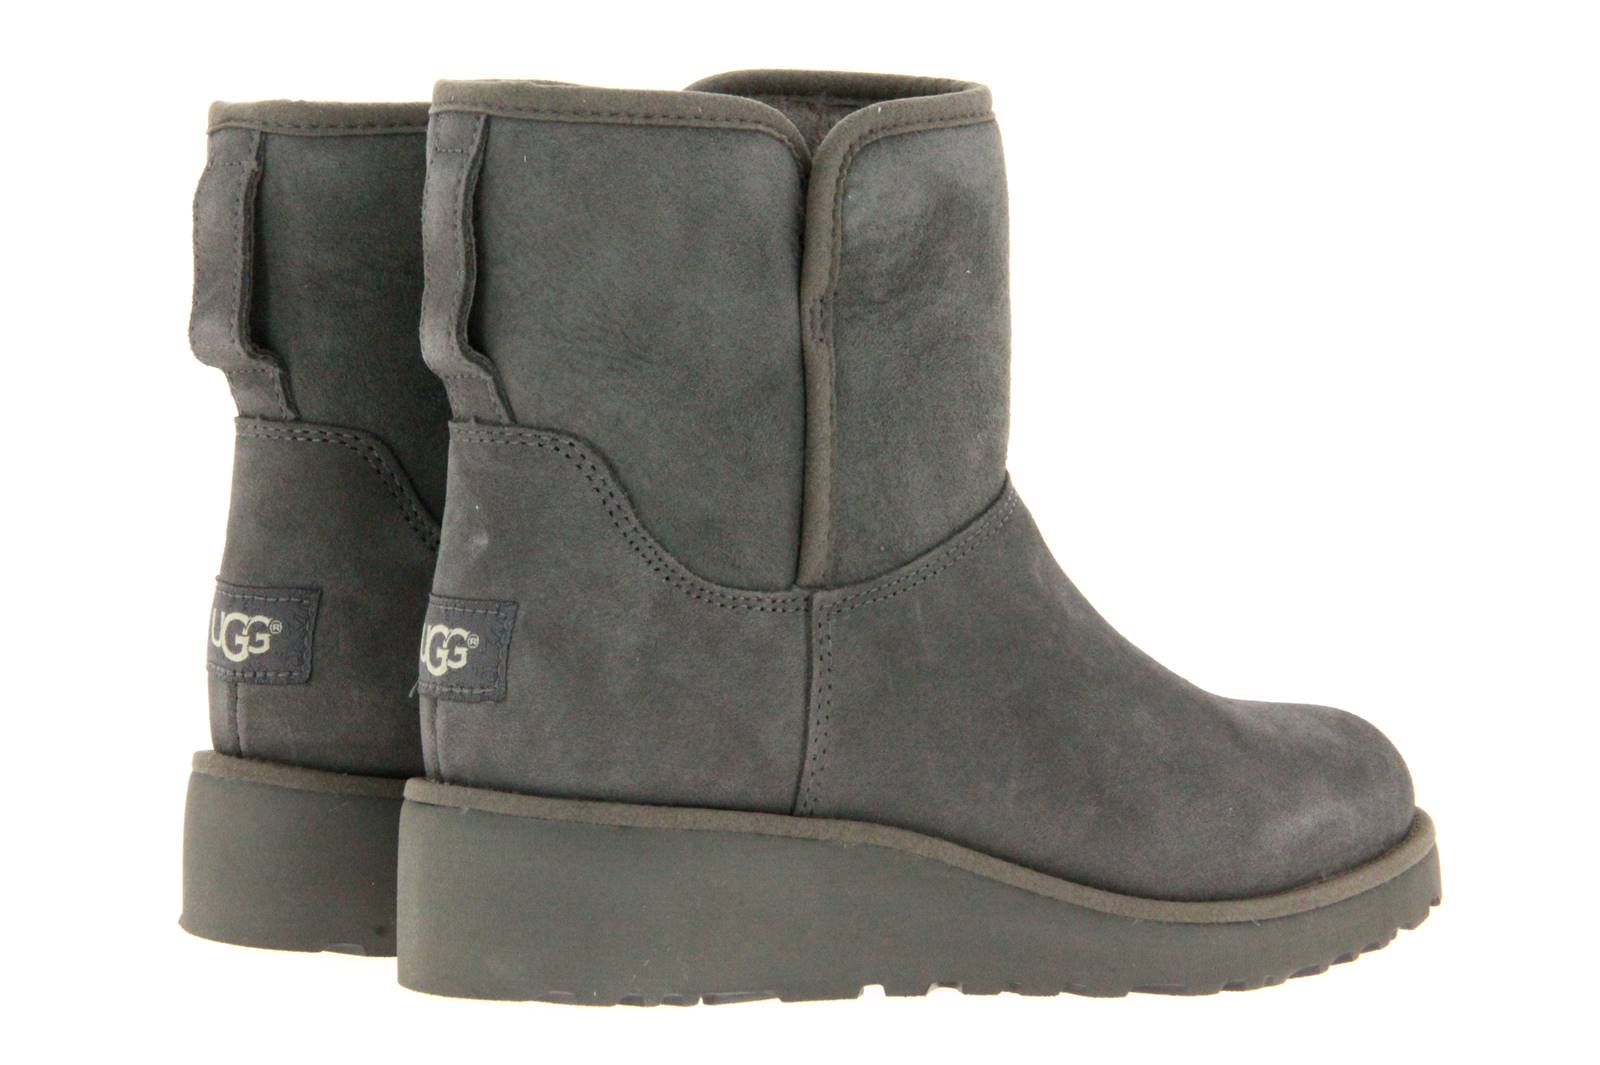 UGG Australia boots KRISTIN GREY - Size: 40